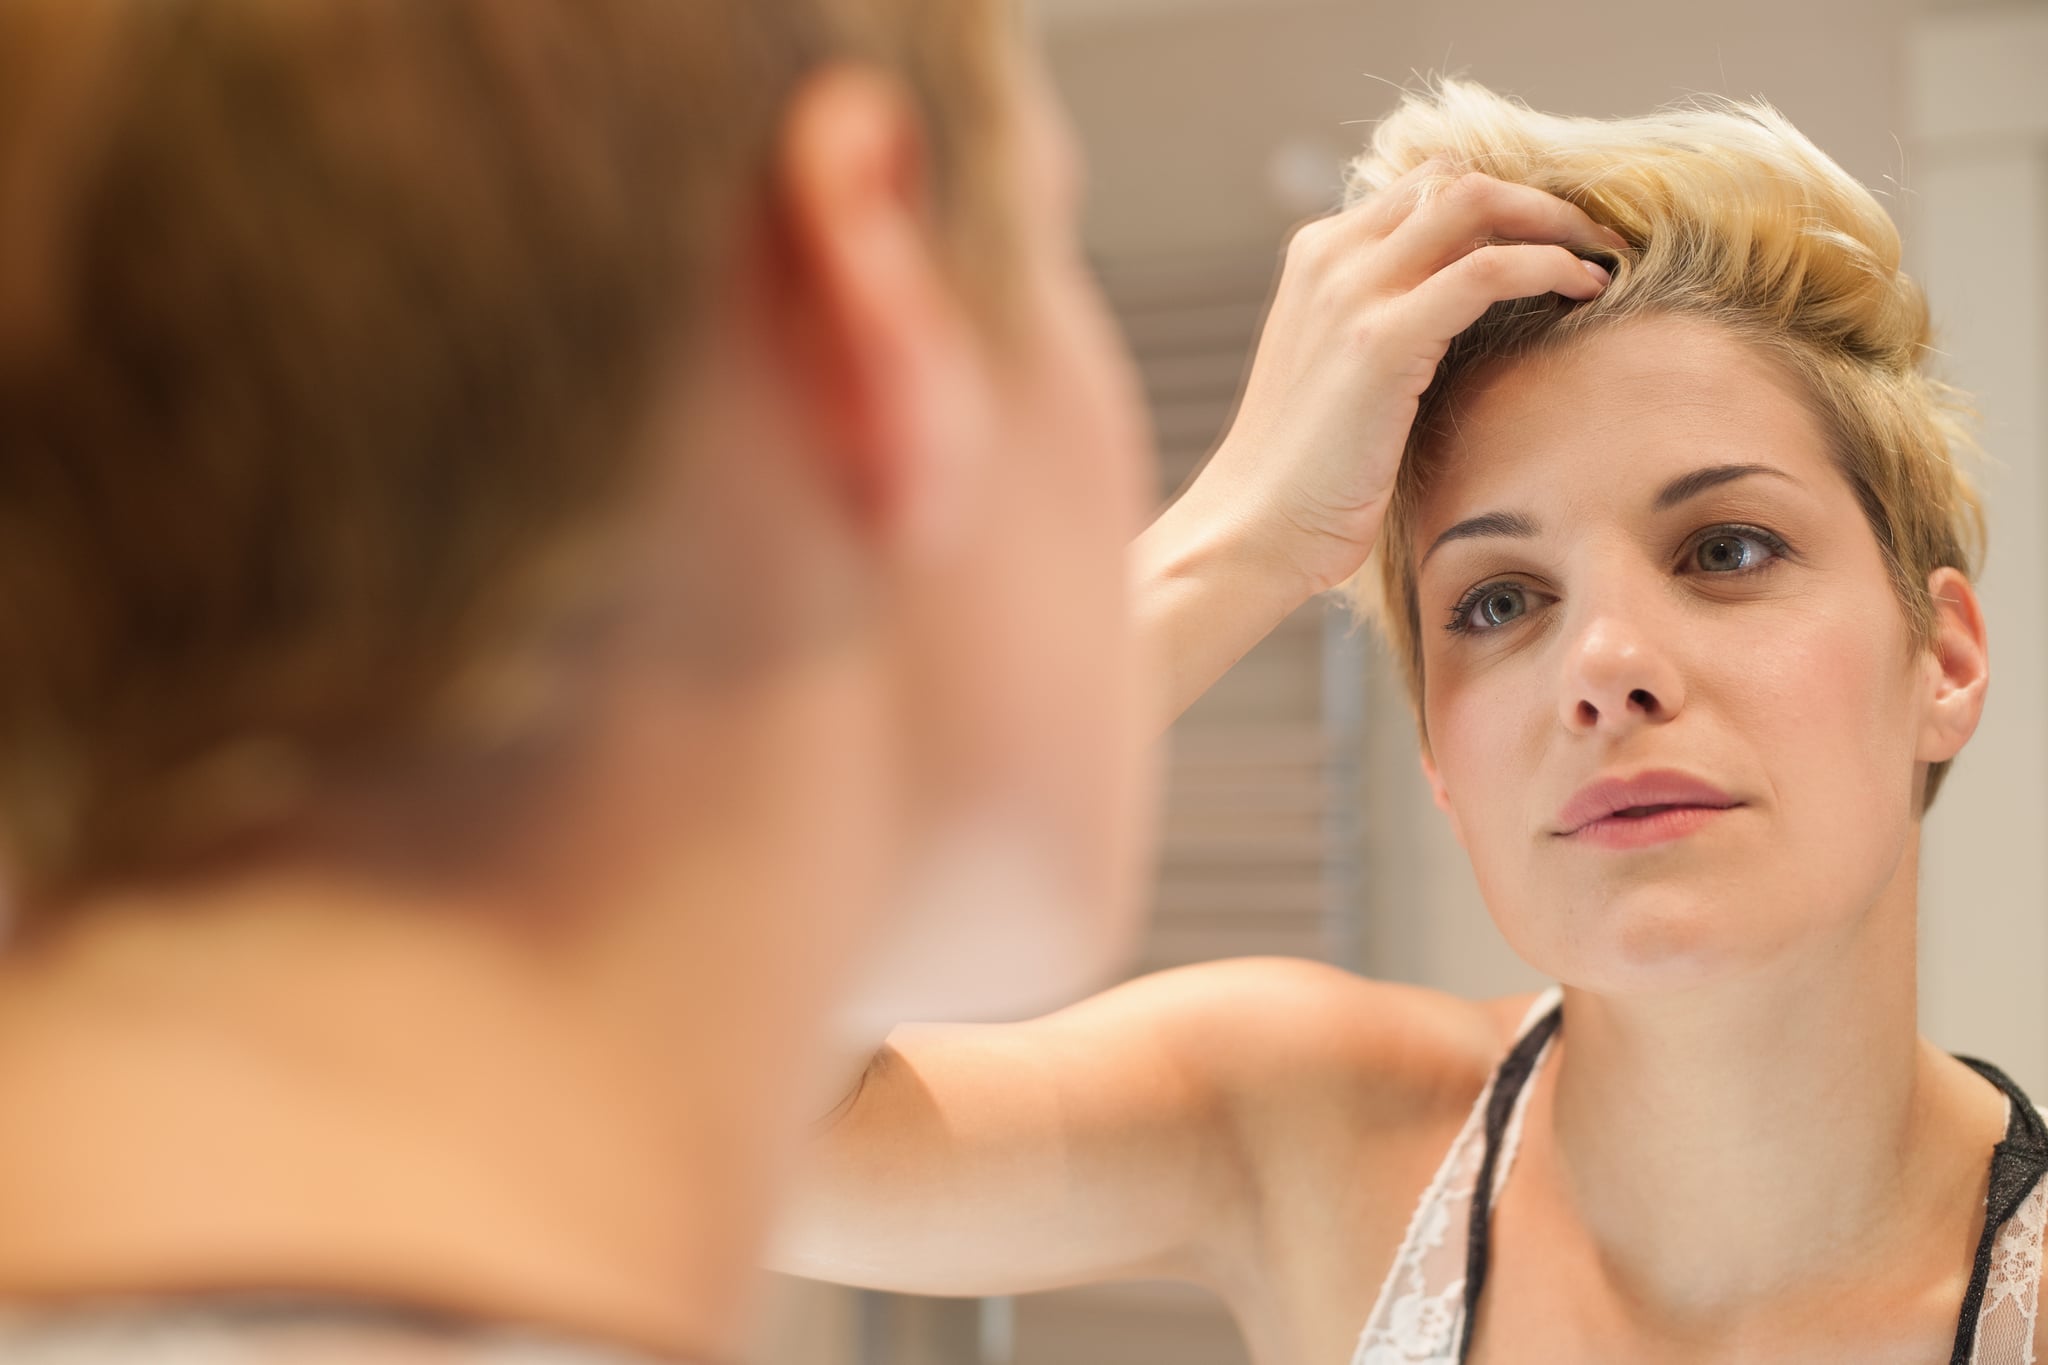 At-Home Hair Mistake: Tingiste (ou branqueaste) o teu cabelo demasiado leve